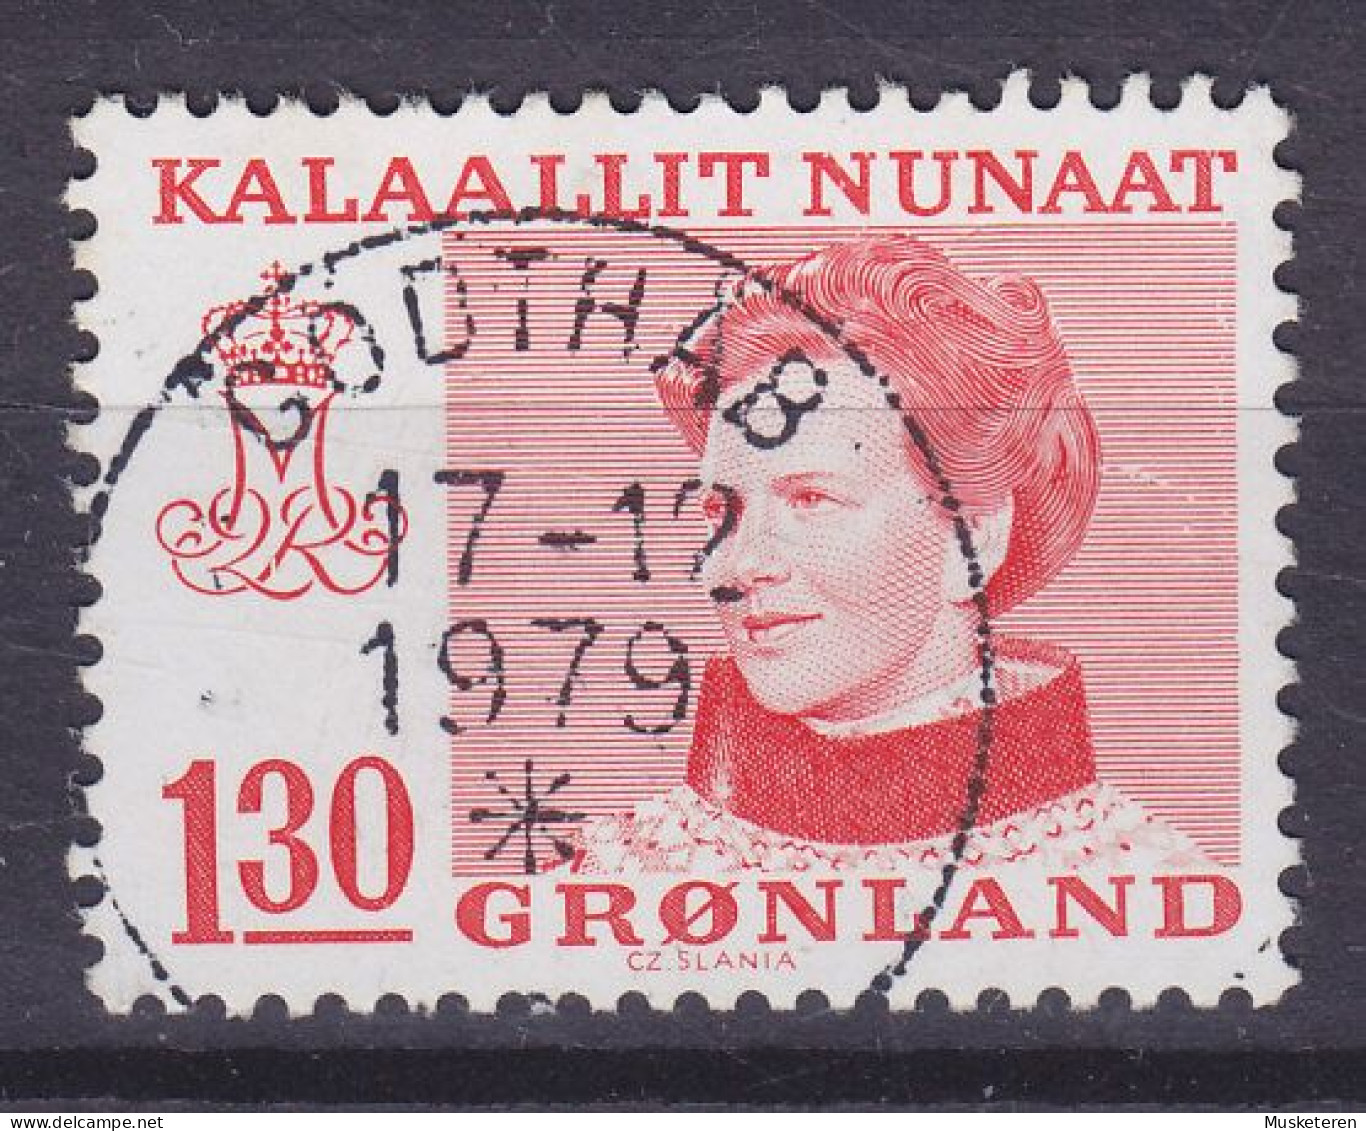 Greenland 1979 Mi. 113, 1.30 (Kr) Queen Margrethe II. (Cz. Slania) Deluxe GODTHÅB Cancel !! - Oblitérés